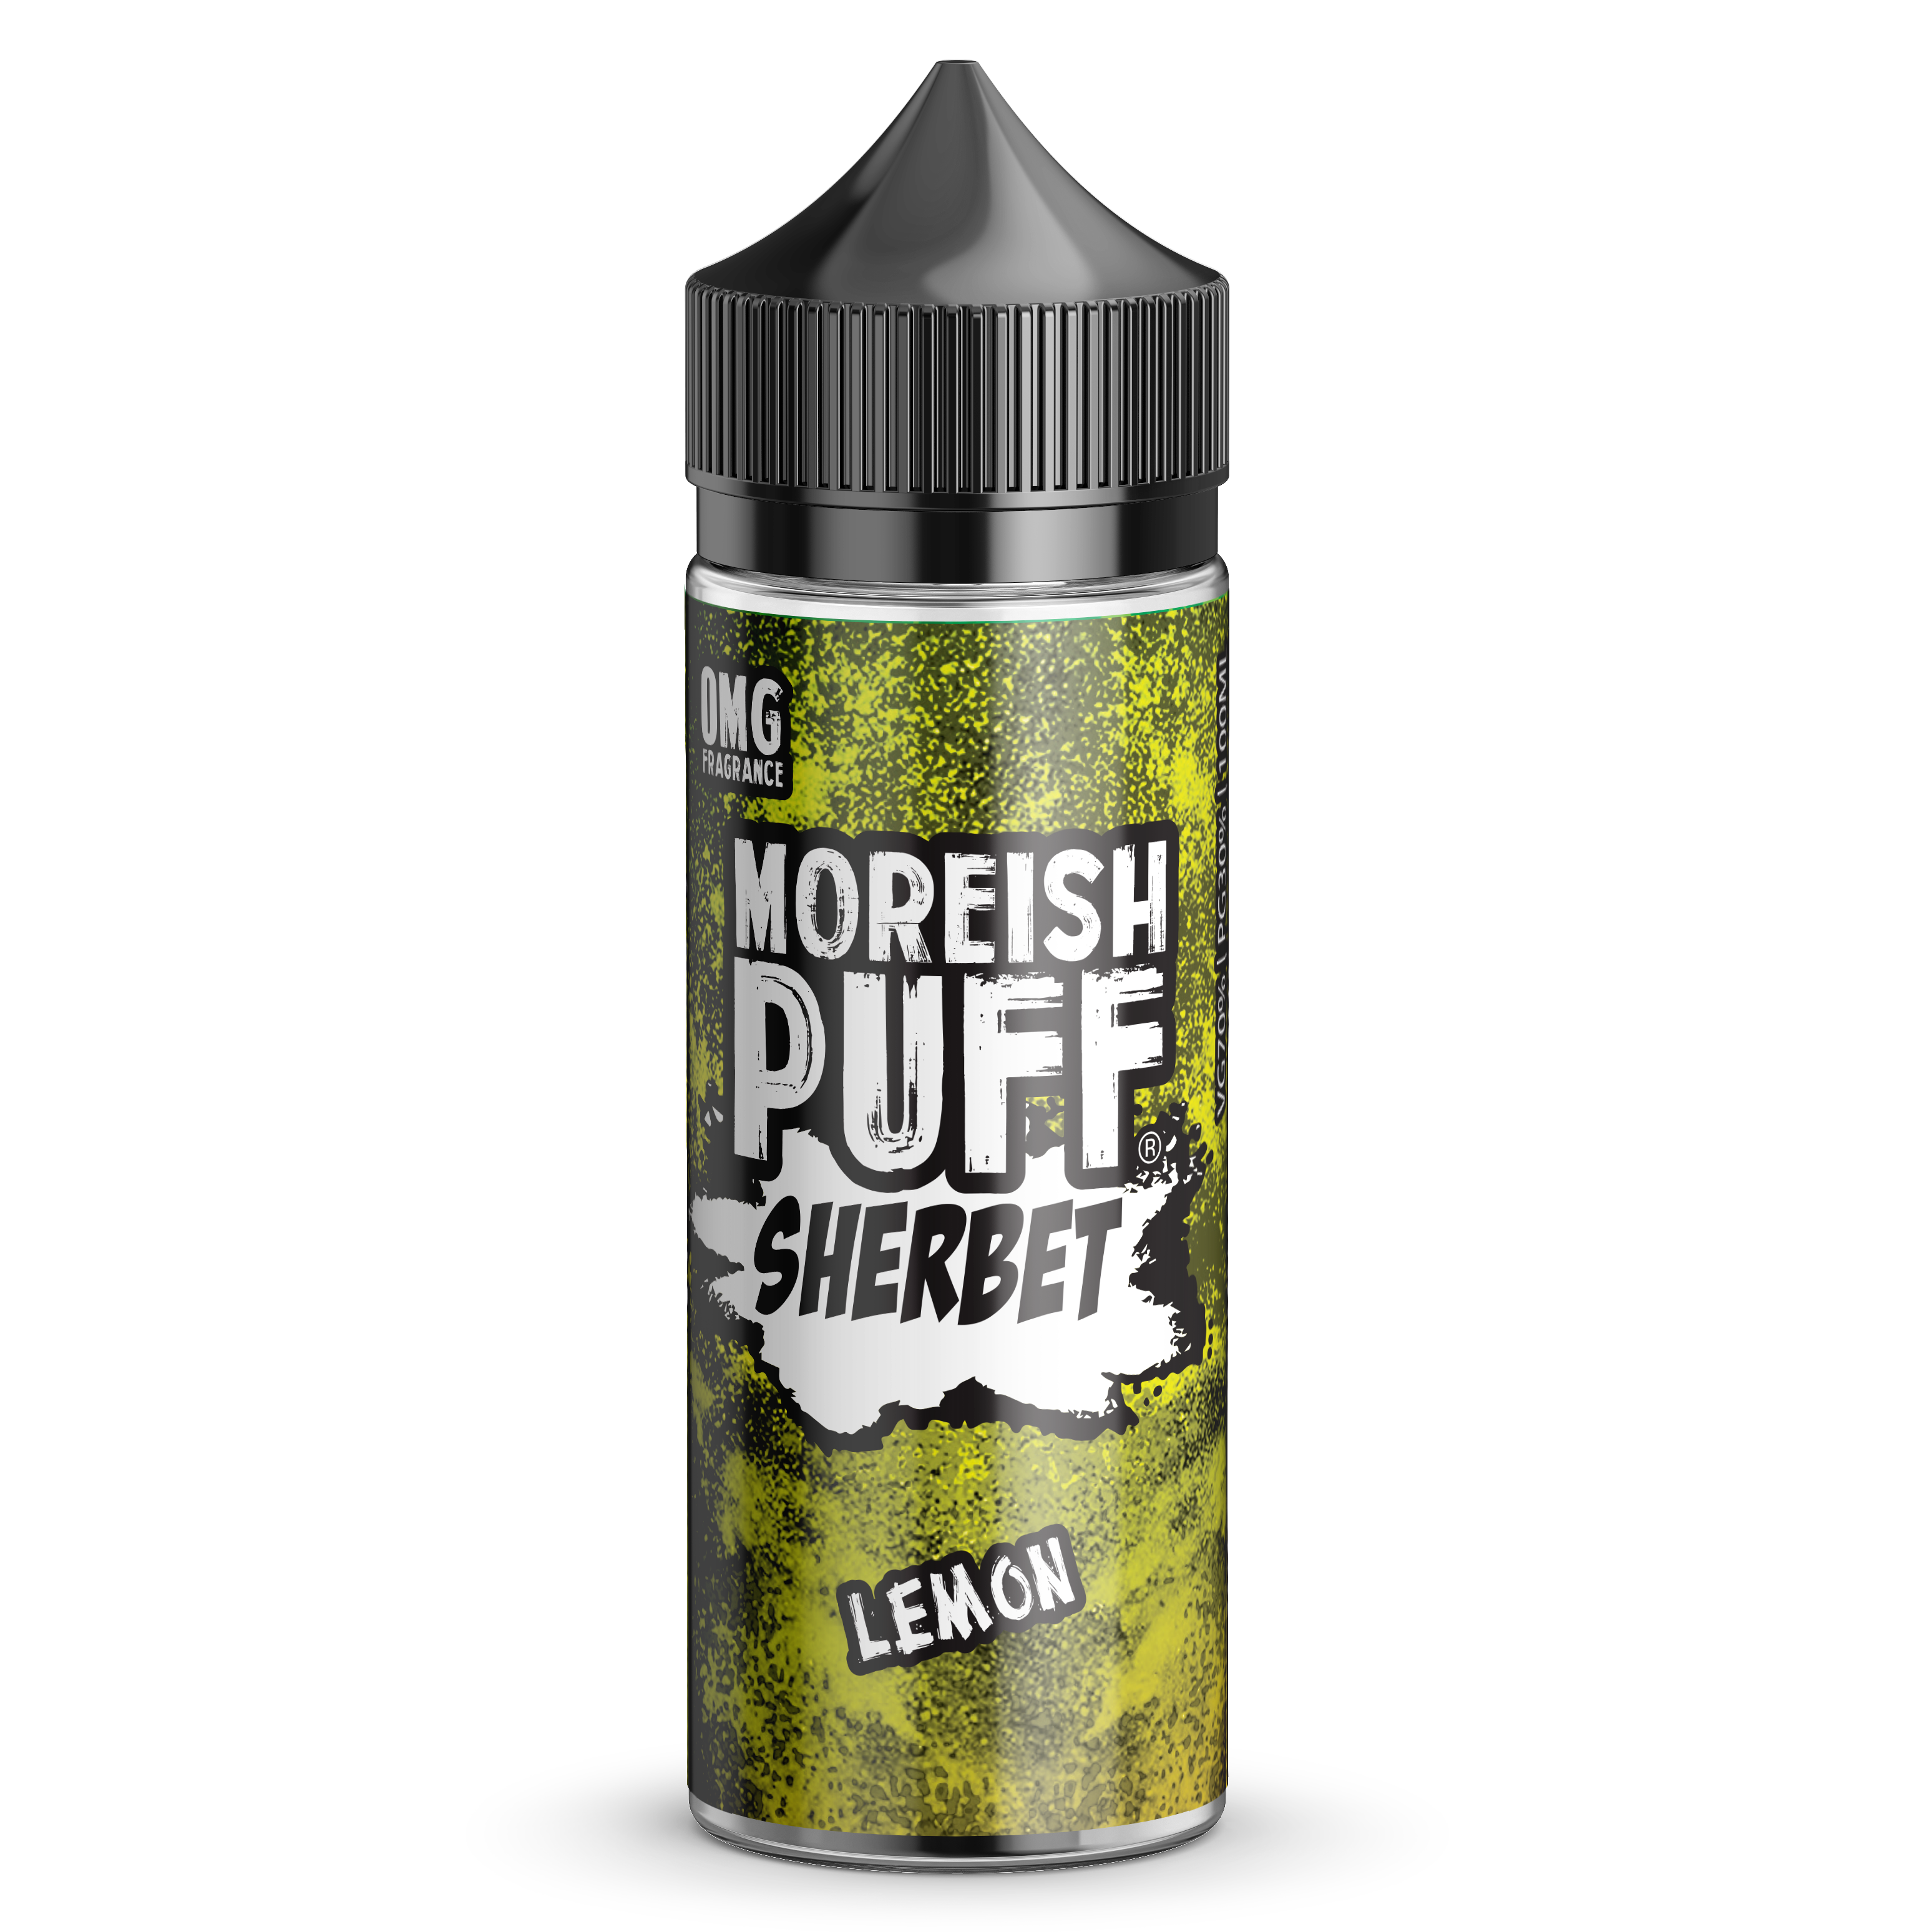 Lemon Sherbet by Moreish Puff 0mg shortfill - 100ml